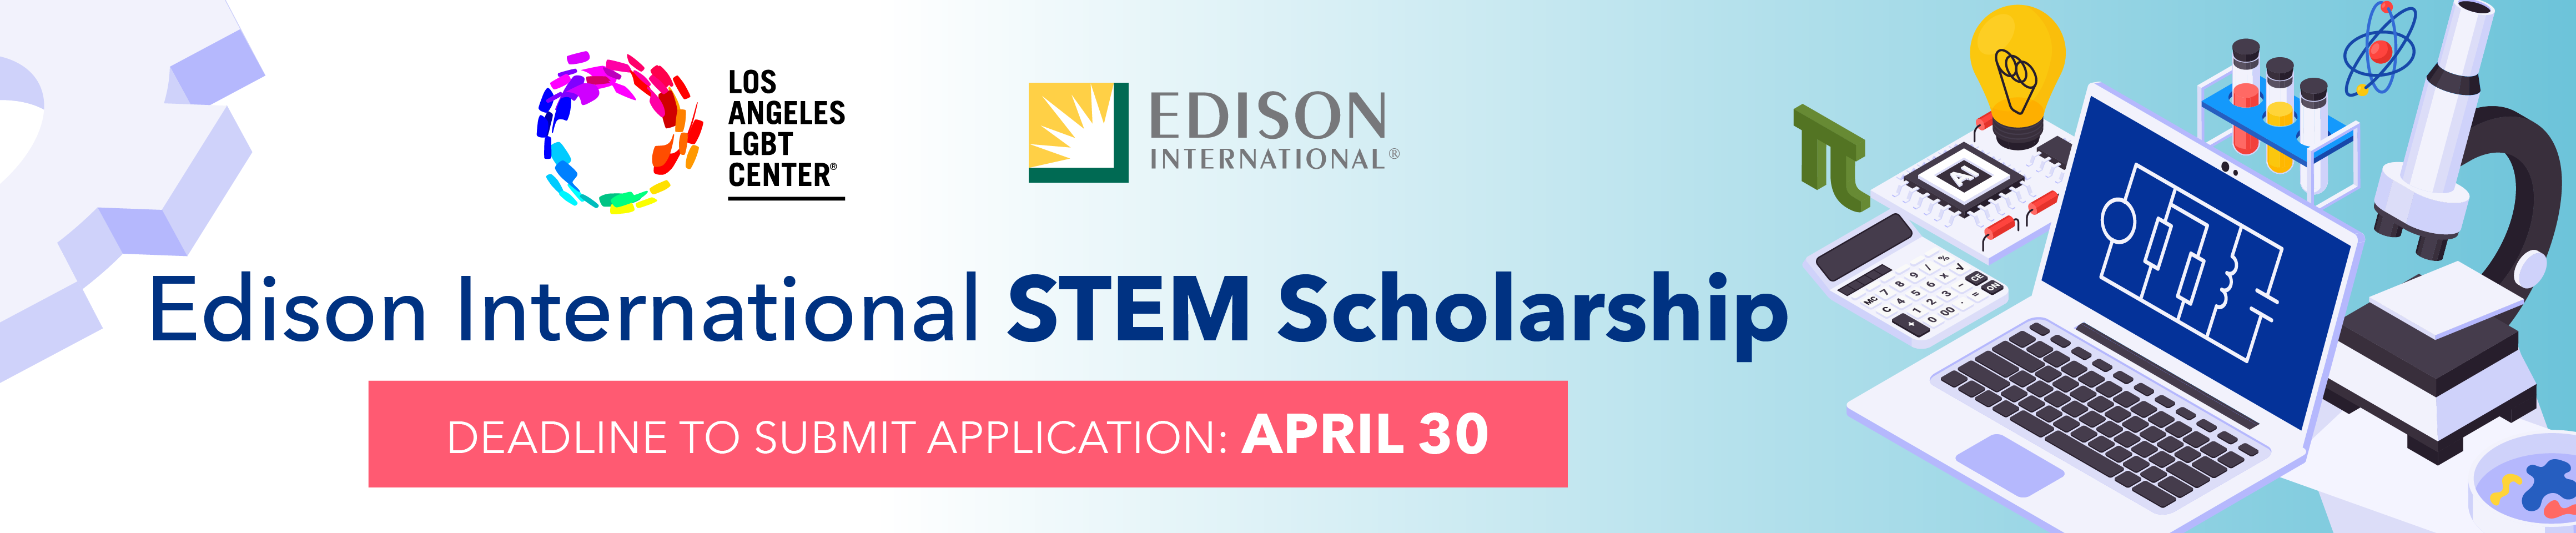 Edison International STEM Scholarship Deadline: April 30, 2022